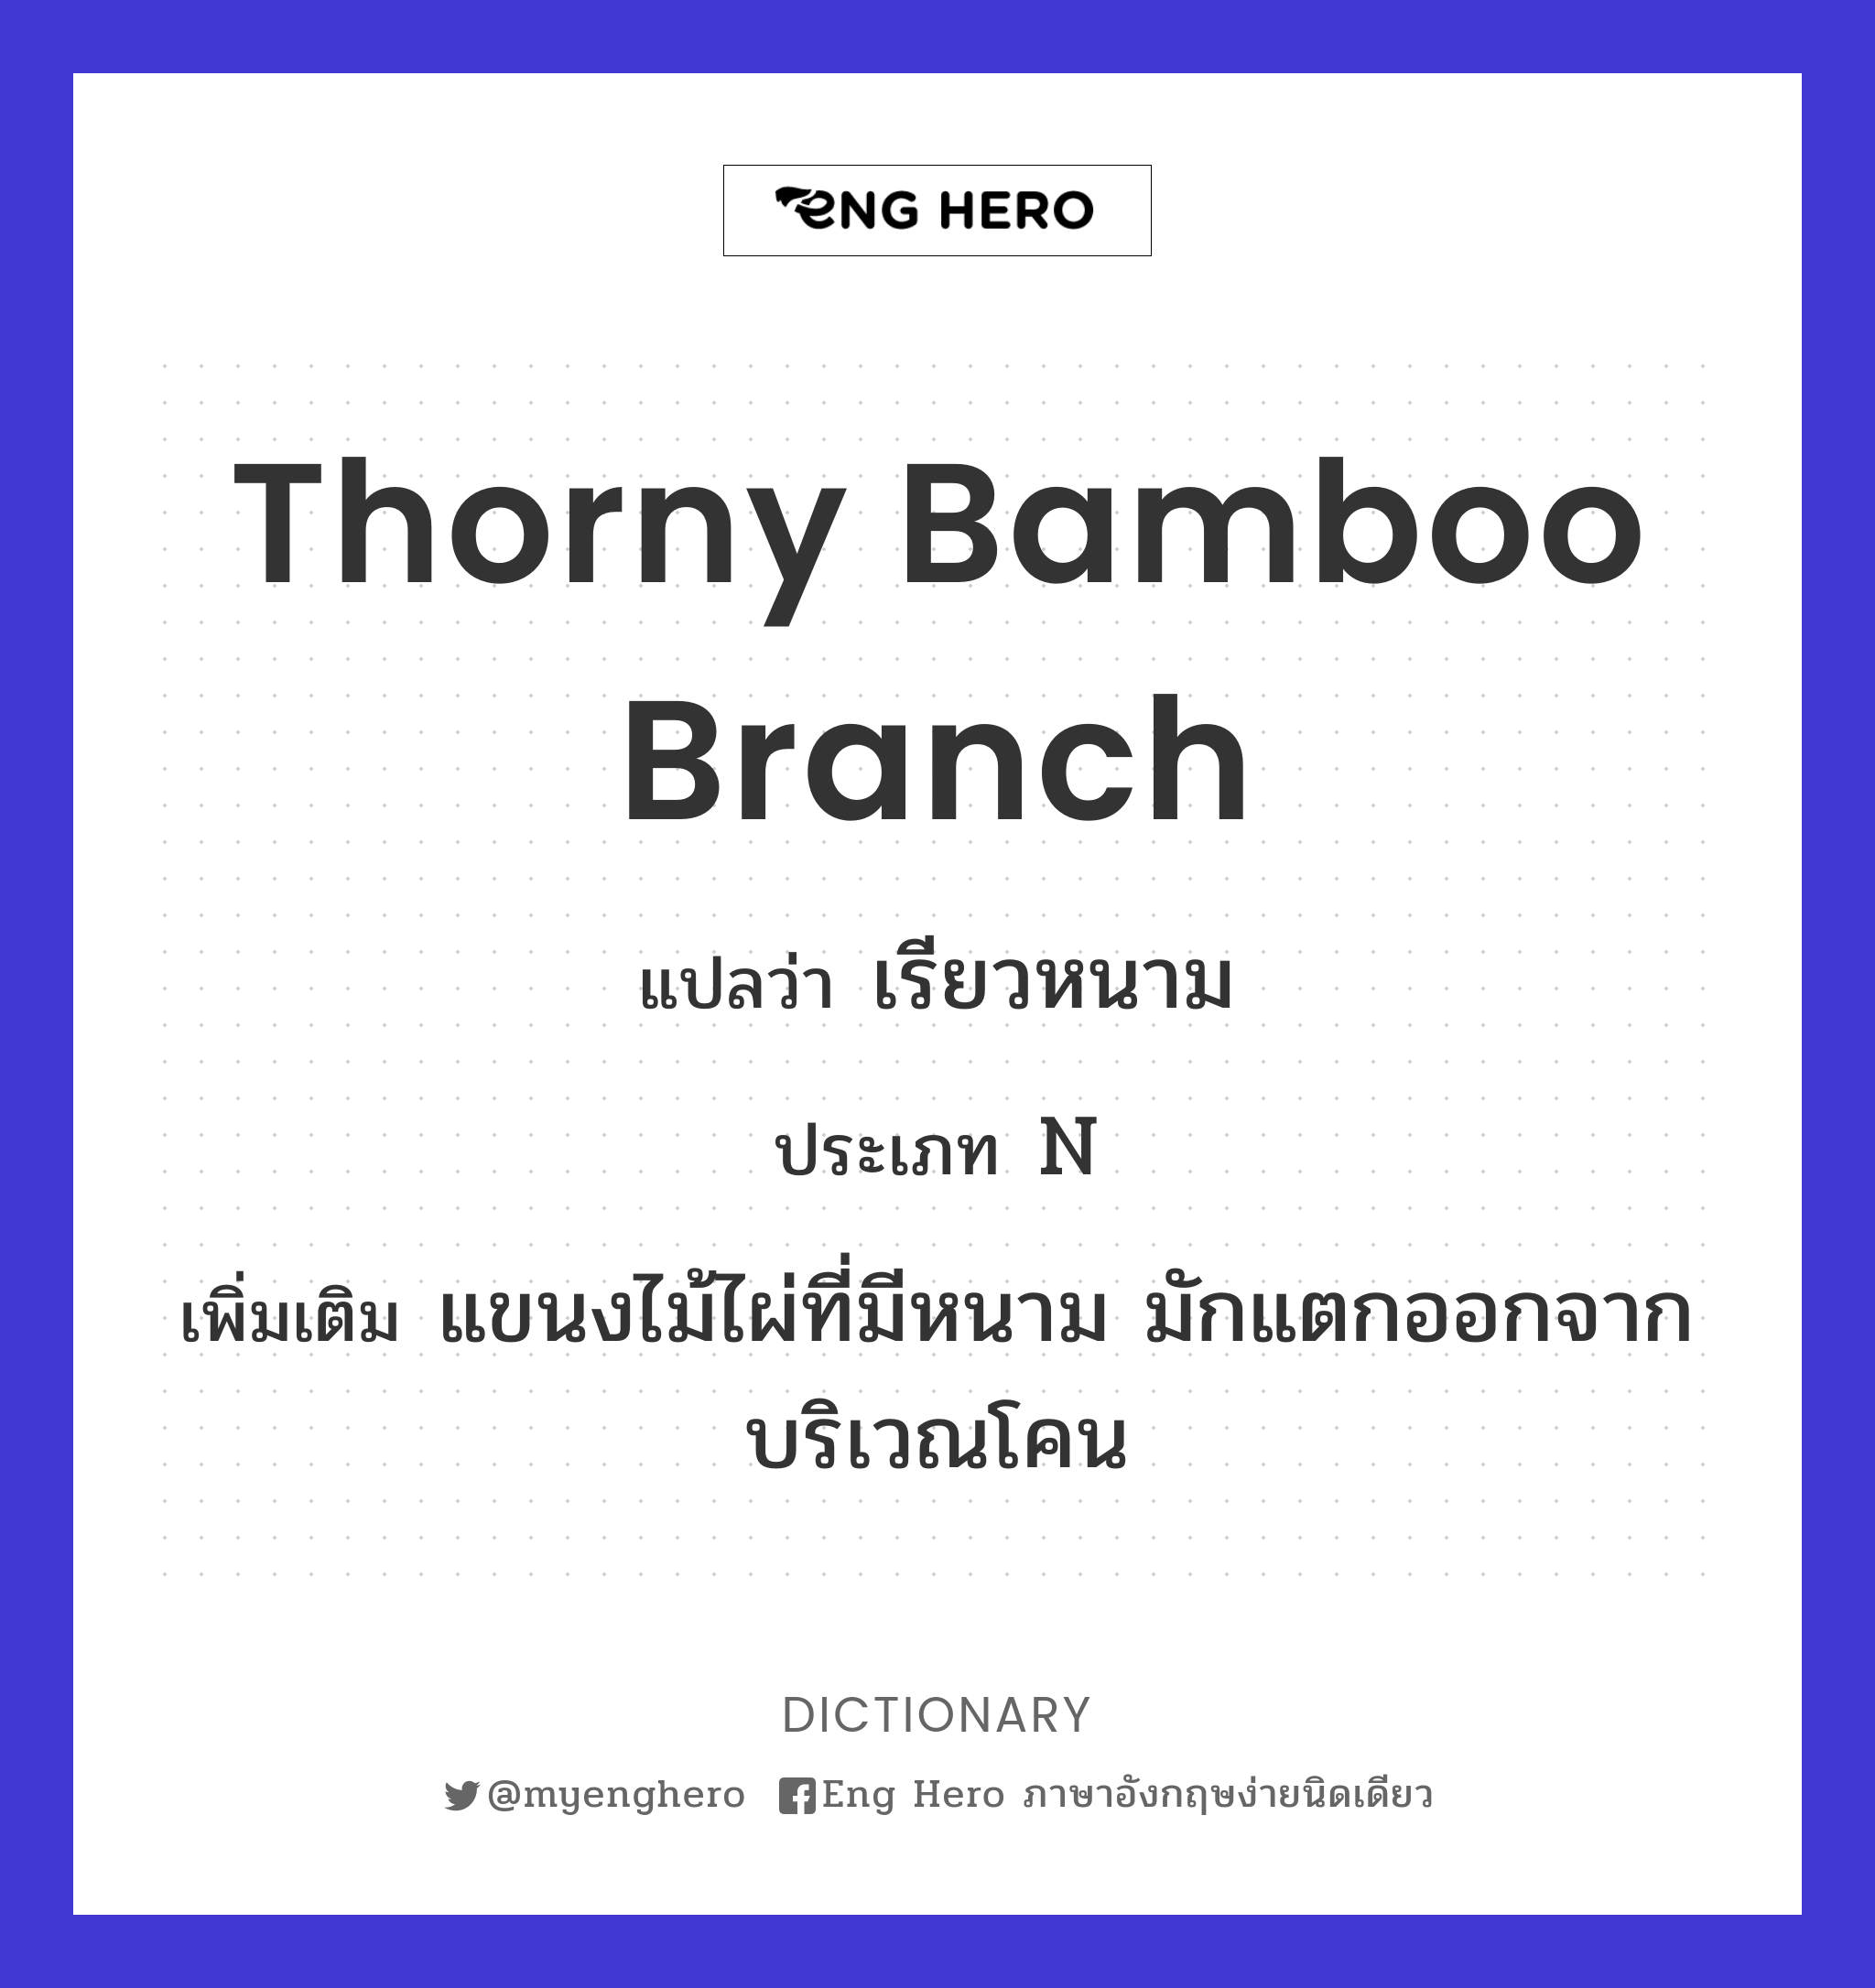 thorny bamboo branch